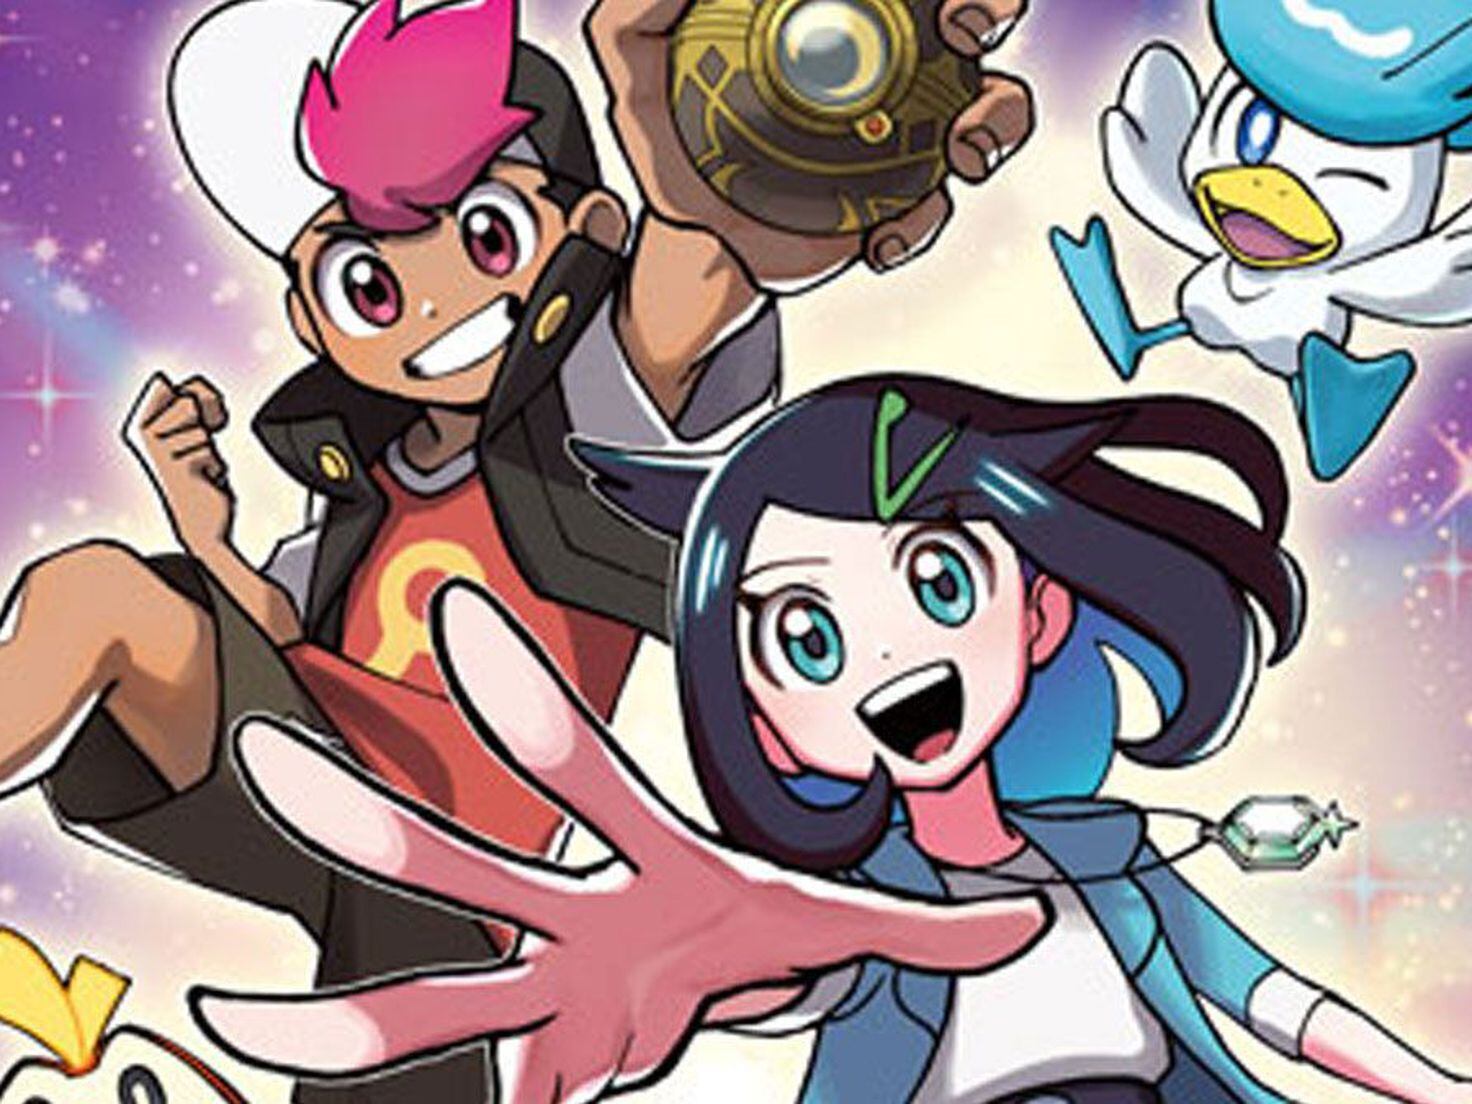 New Pokémon anime receives first trailer - Meristation